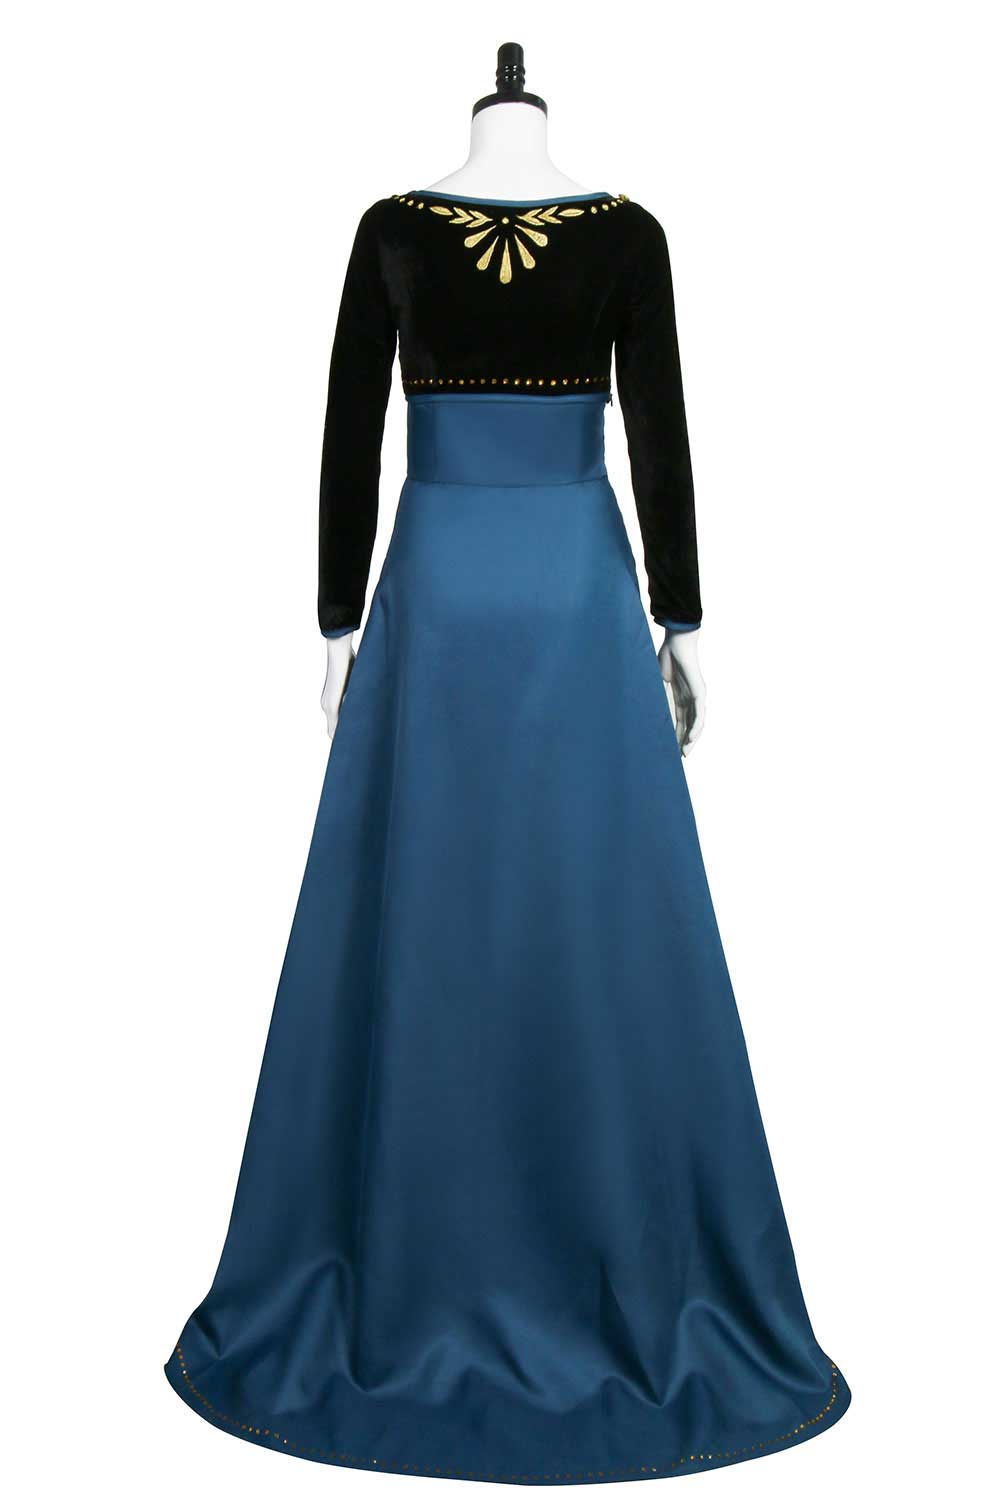 Disney Frozen 2 Queen Anna Coronation Dress Princess Halloween Cosplay Costume Outfit Cape-Takerlama